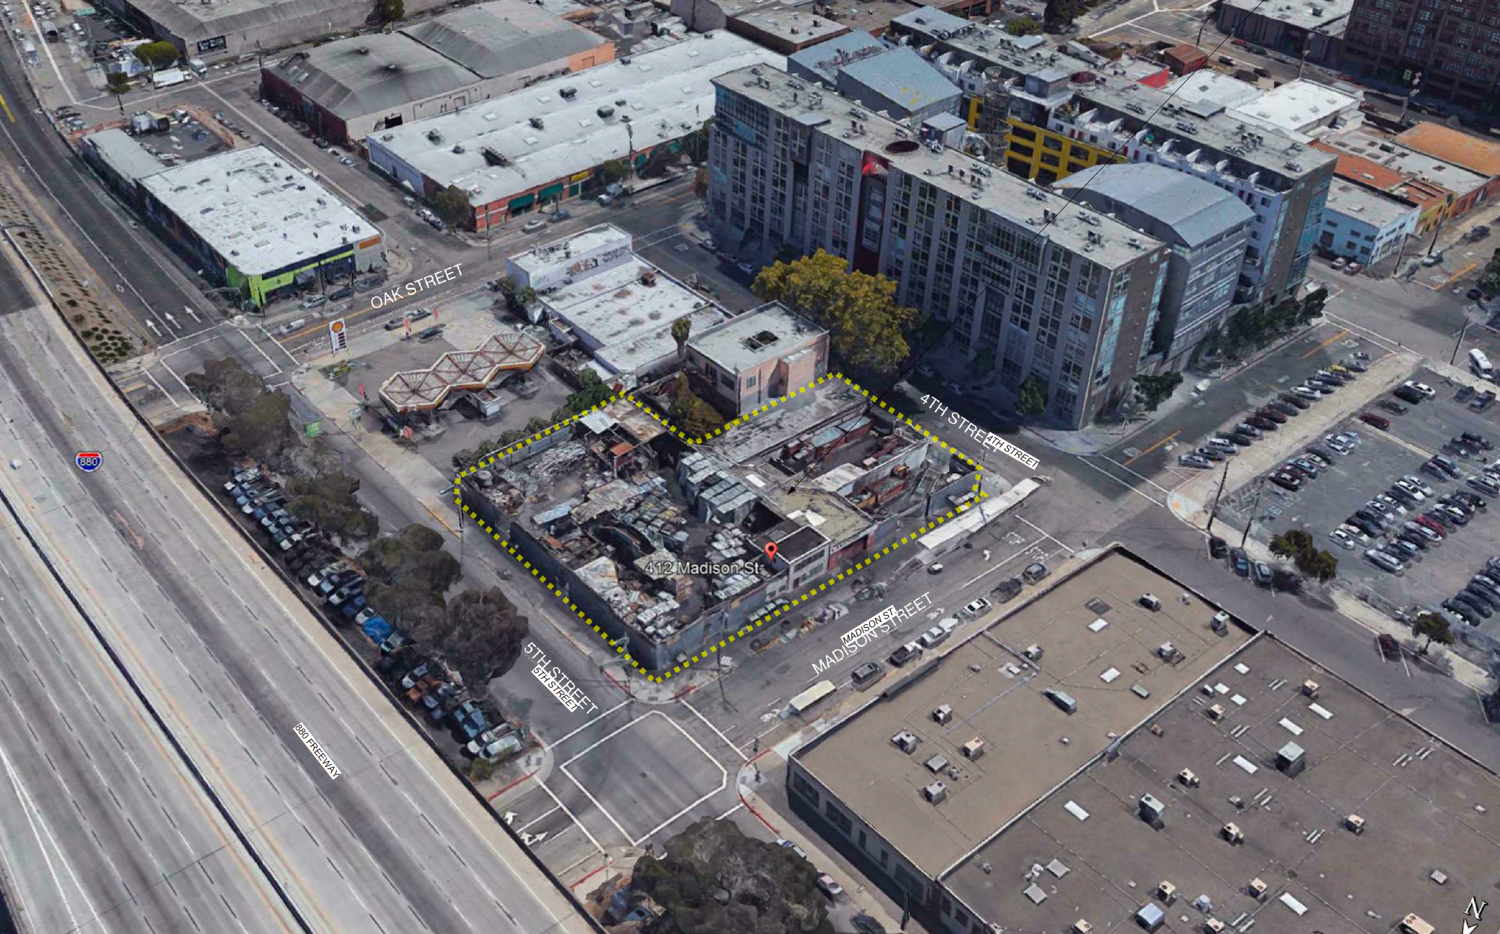 412 Madison Street aerial, image via Google Satellite and planning documents